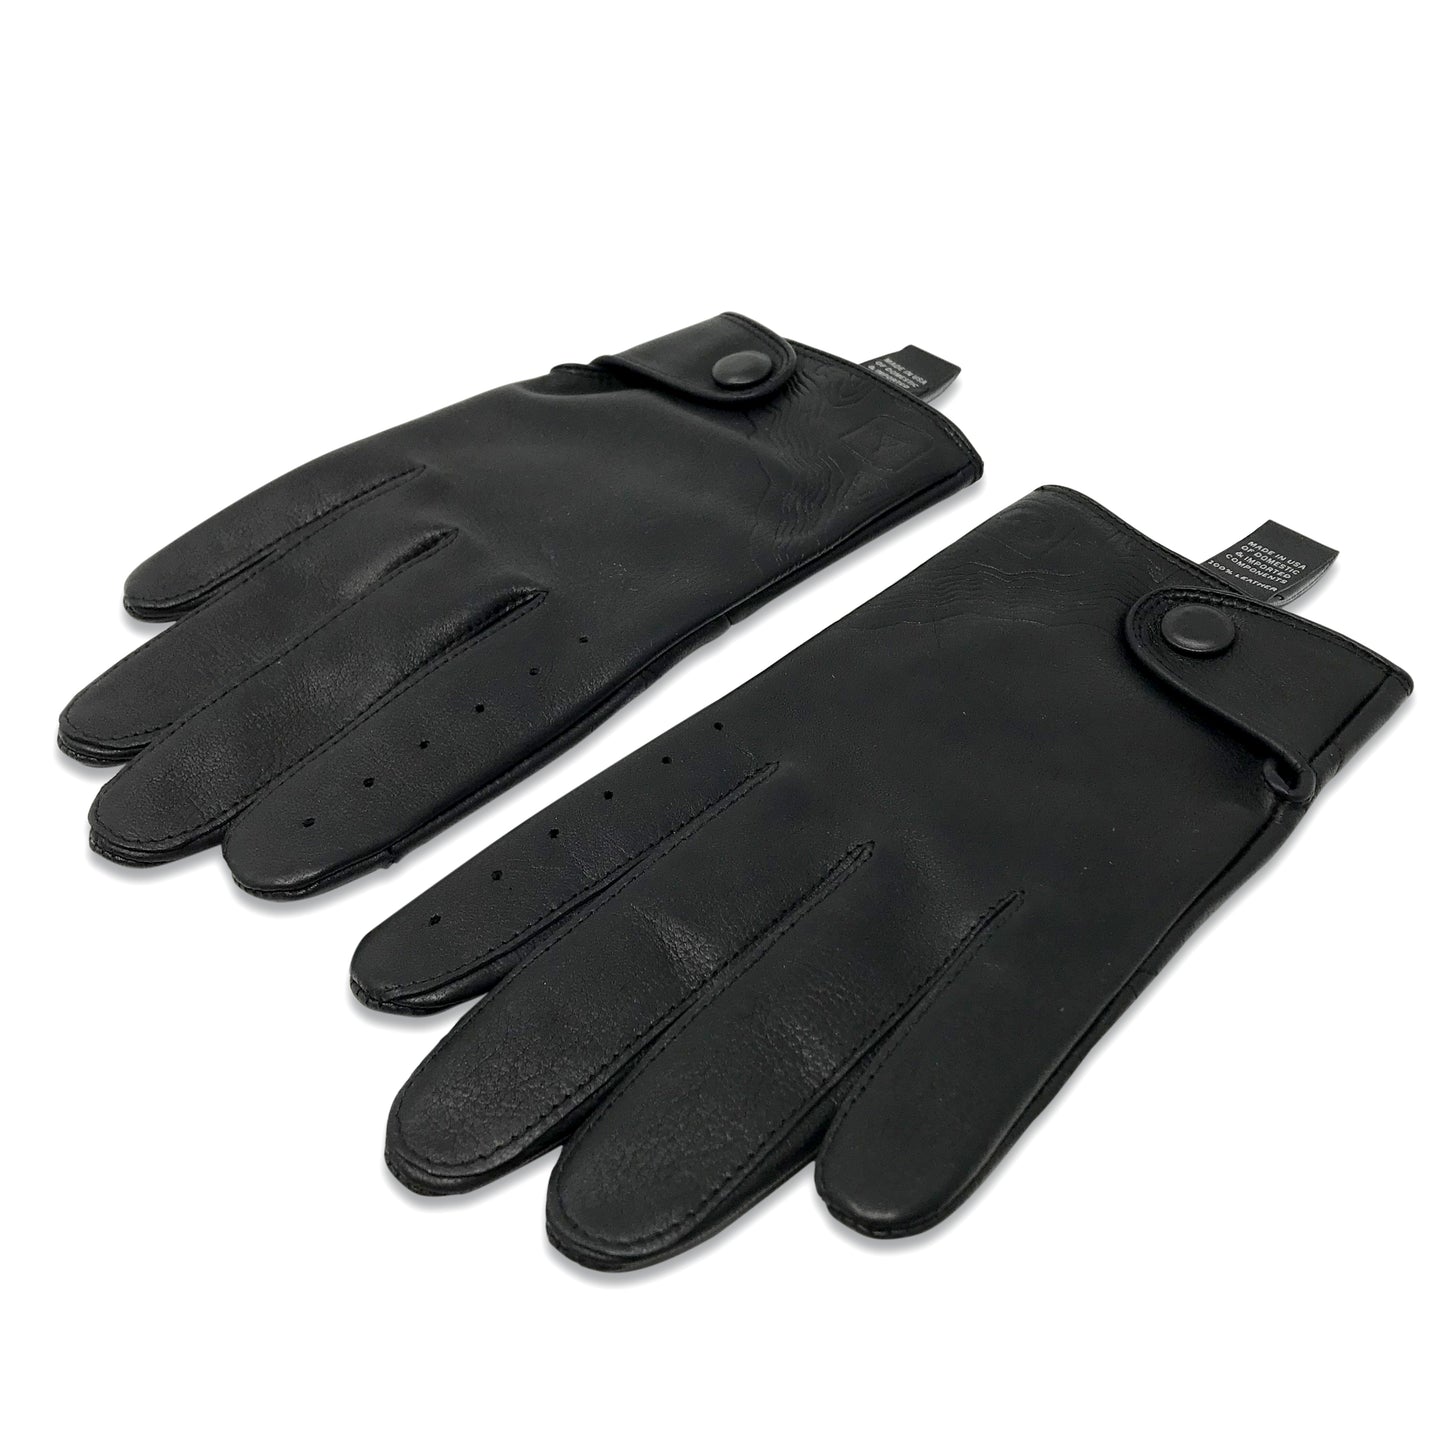 Gambit - Triple Aught Design Collaboration Gloves, Black